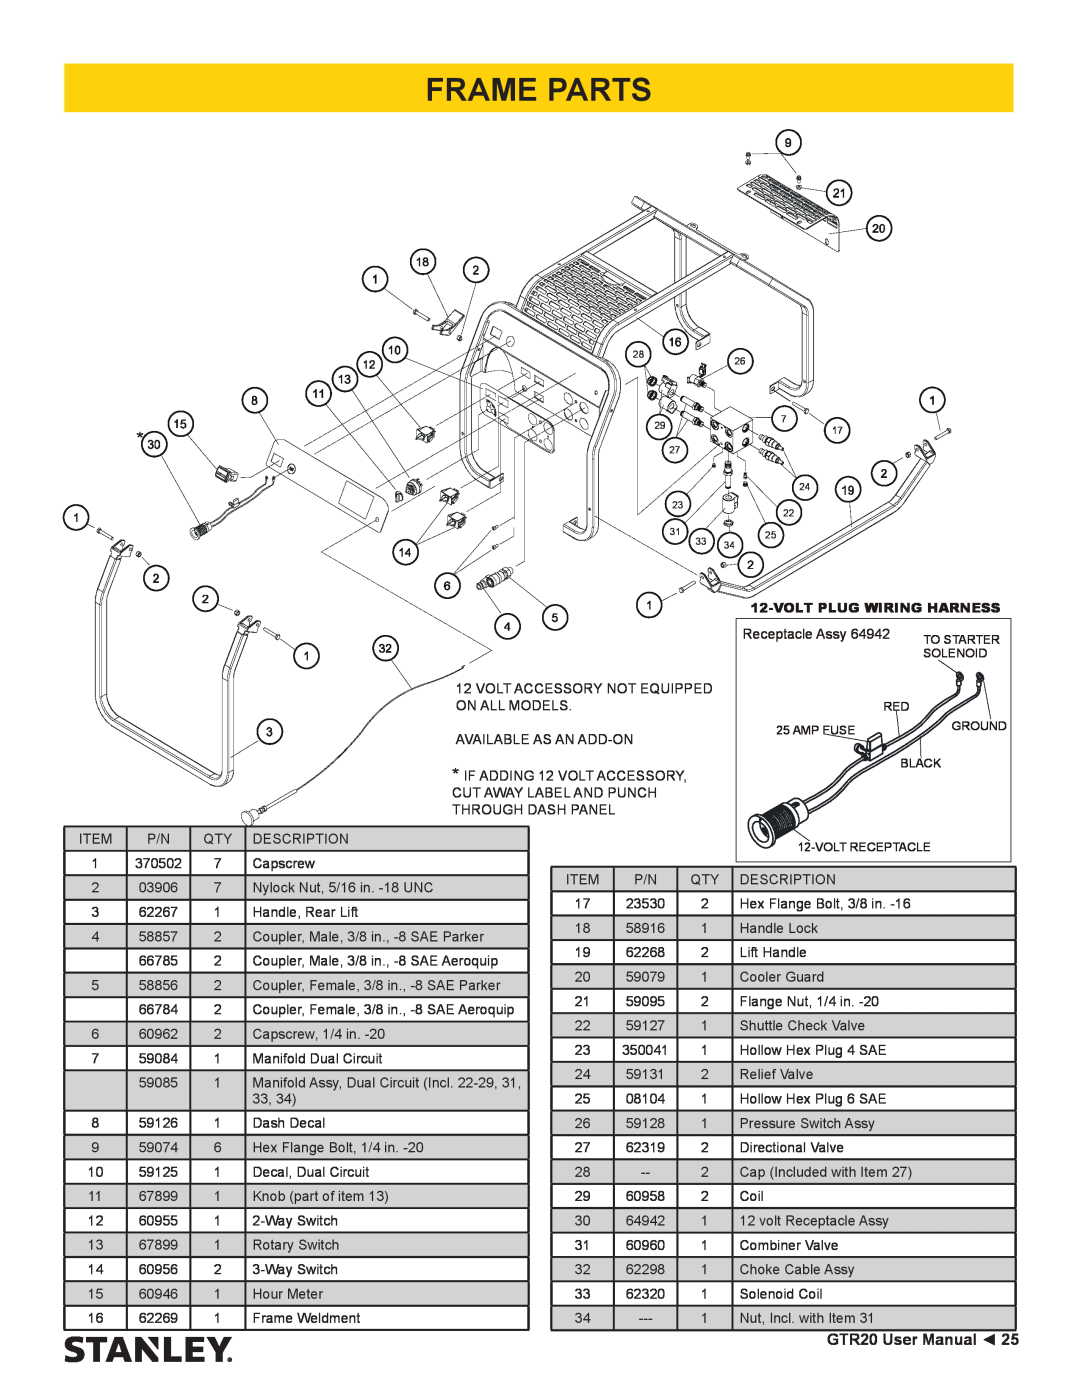 Stanley Black & Decker GTR20 user manual Frame Parts, Receptacle Assy 